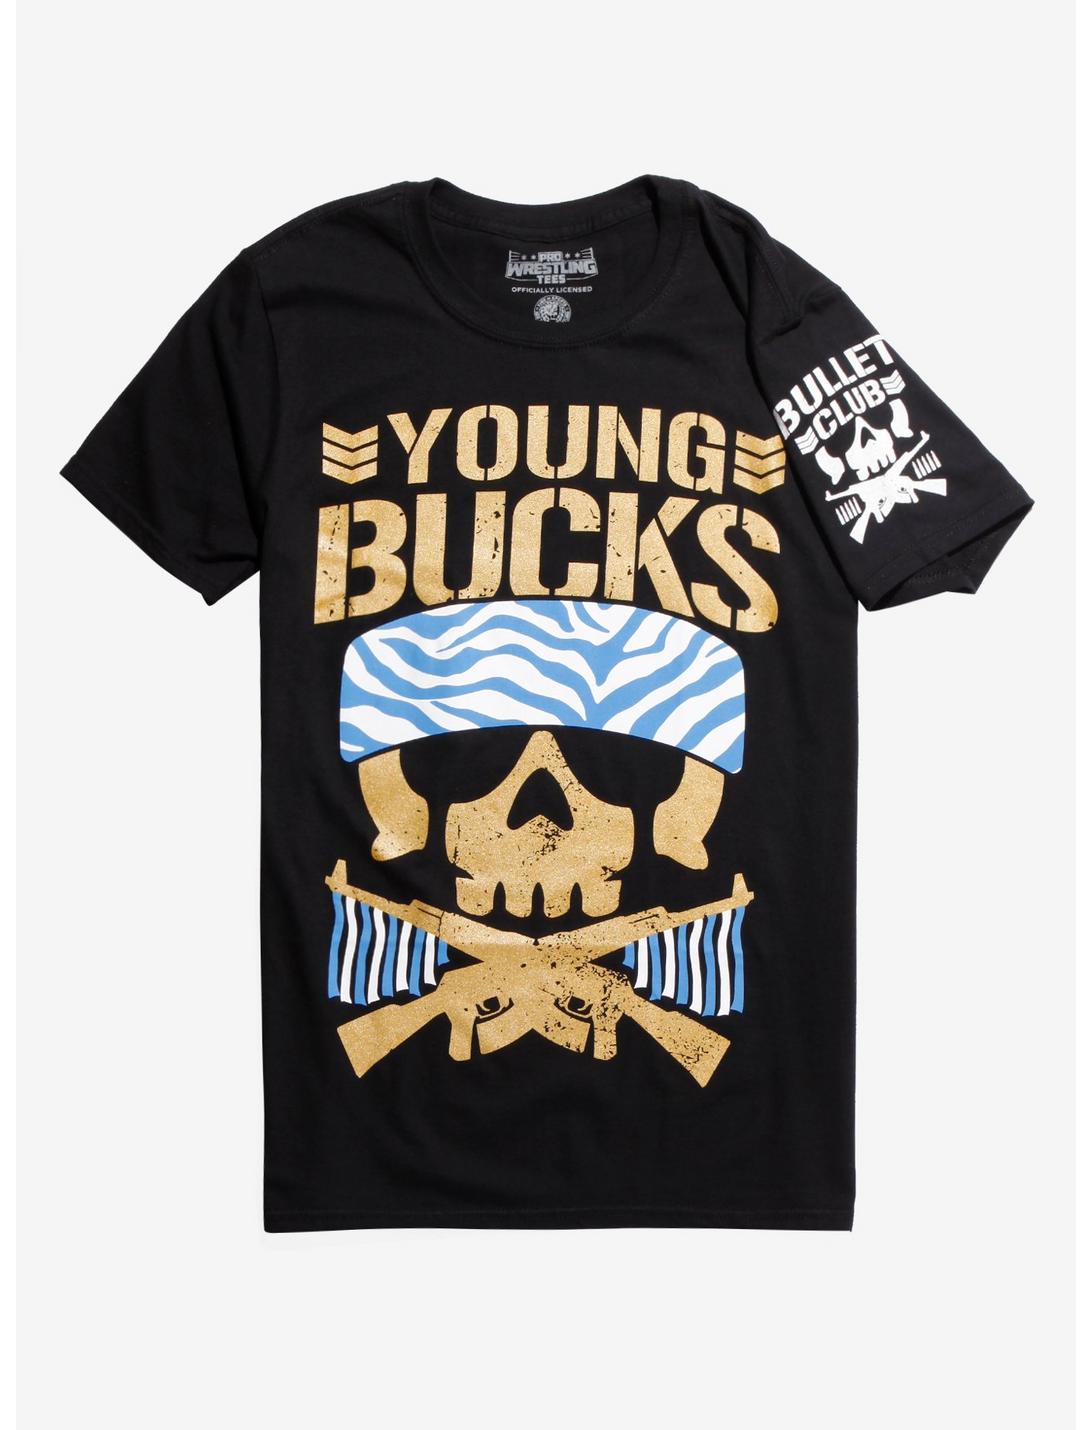 New Japan Pro-Wrestling Bullet Club Young Bucks Blue & White Stripe T-Shirt, BLACK, hi-res